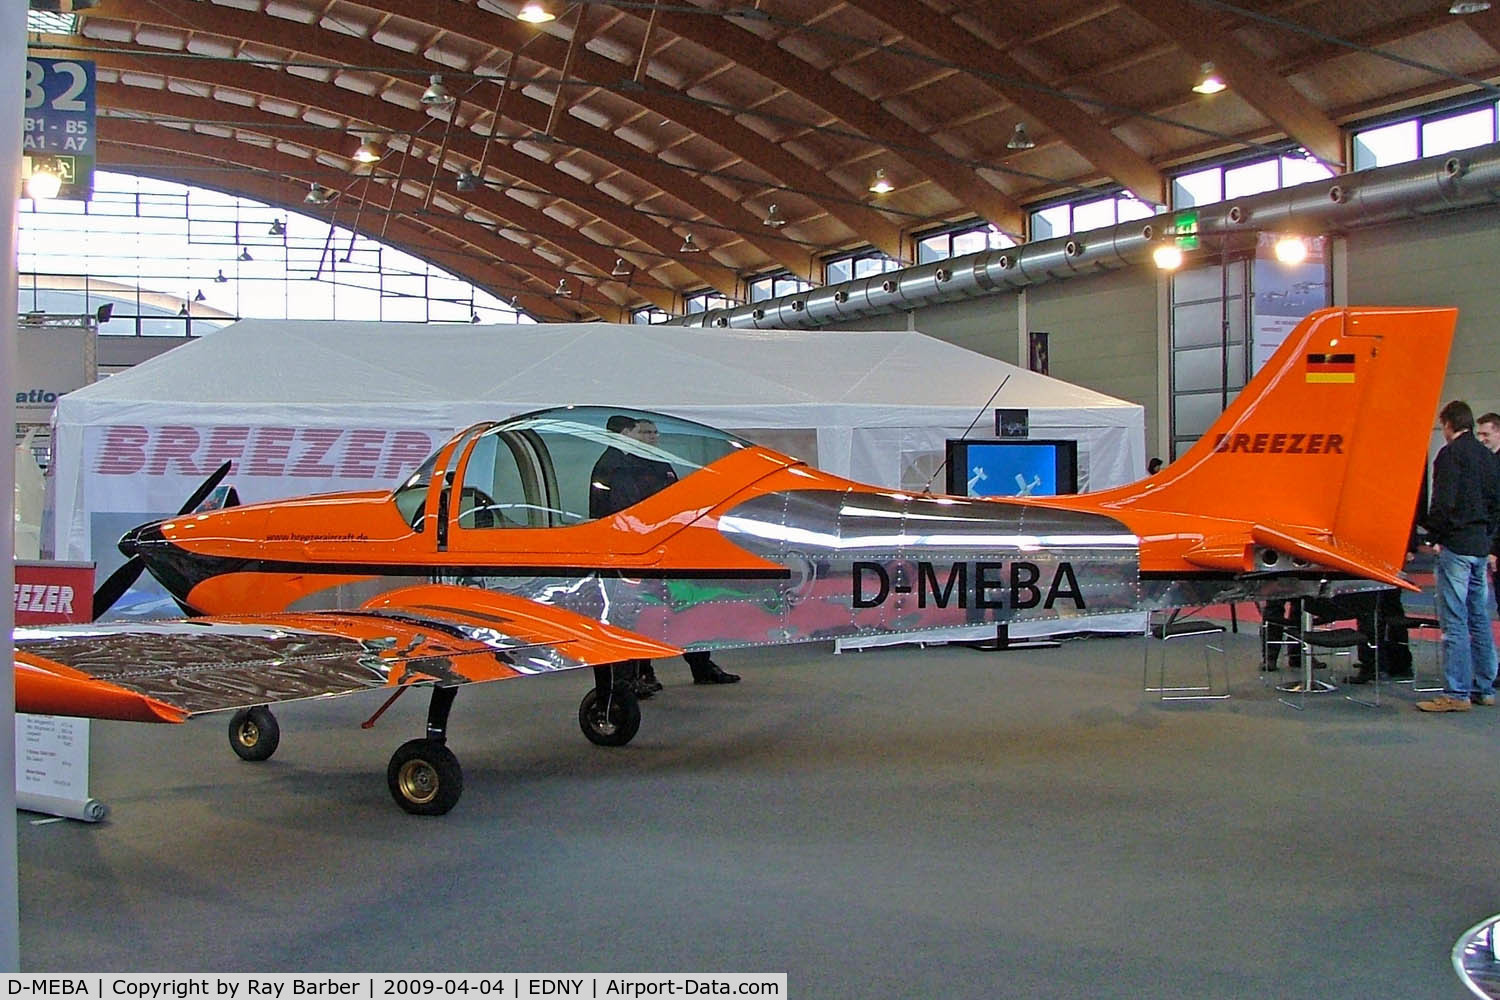 D-MEBA, 2010 Aerostyle B600 C/N 014LSA, Aerostyle Breezer [014LSA] Friedrichshafen~D 04/04/2009